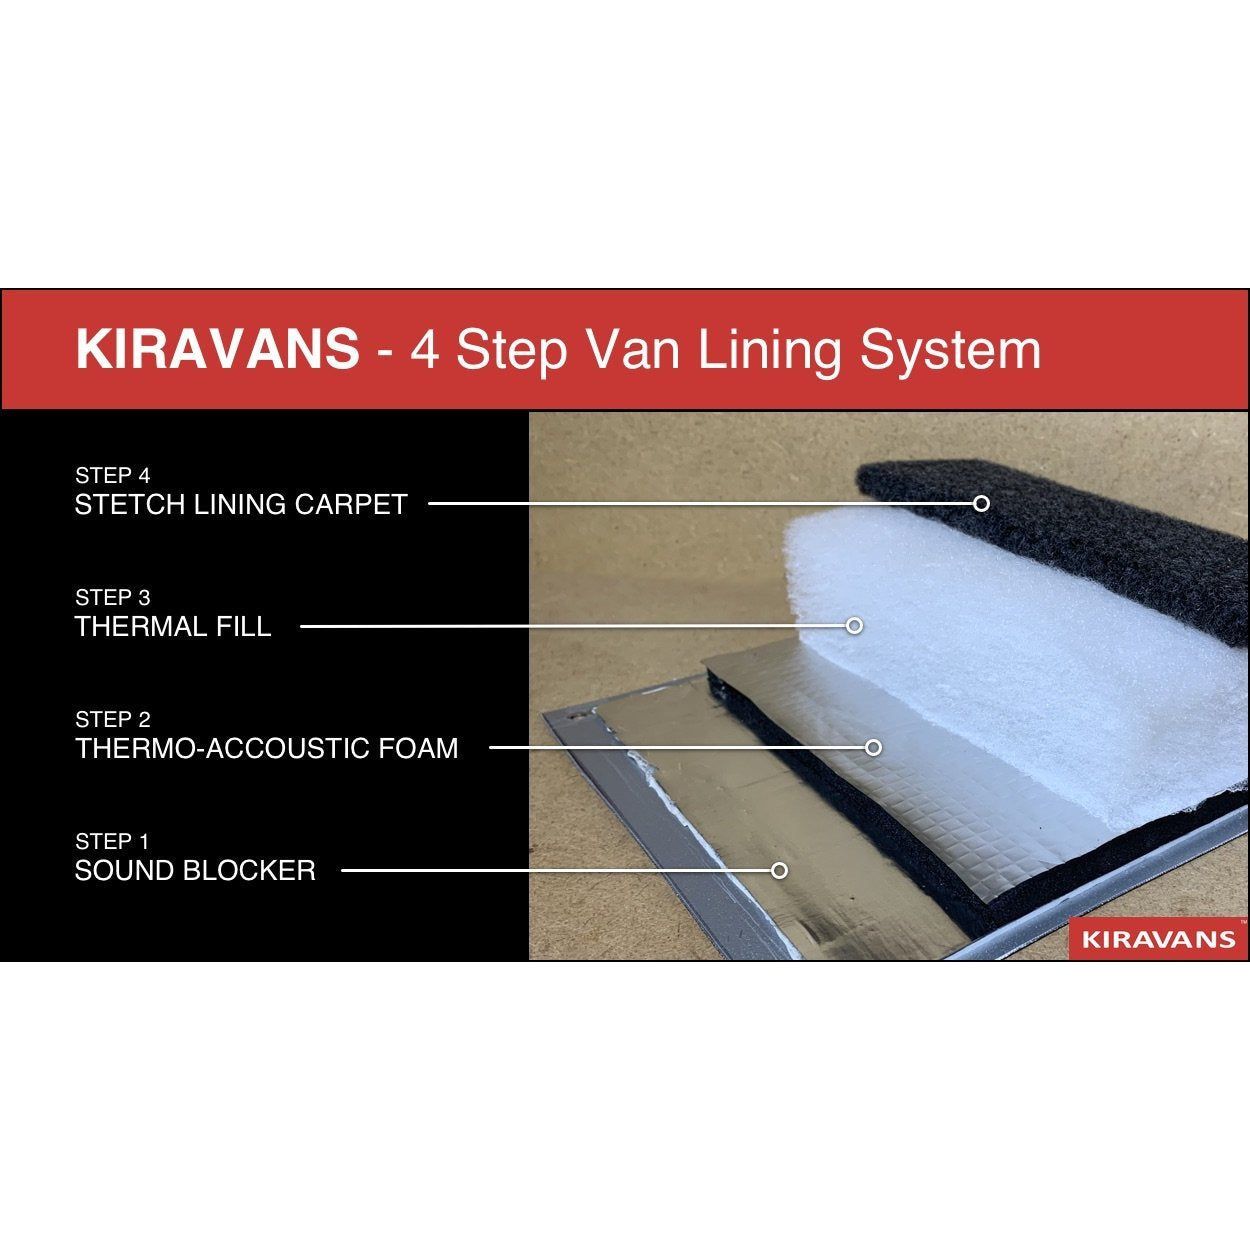 Thermal Fill Insulation 35mm (1 roll at 10m) Kiravans 